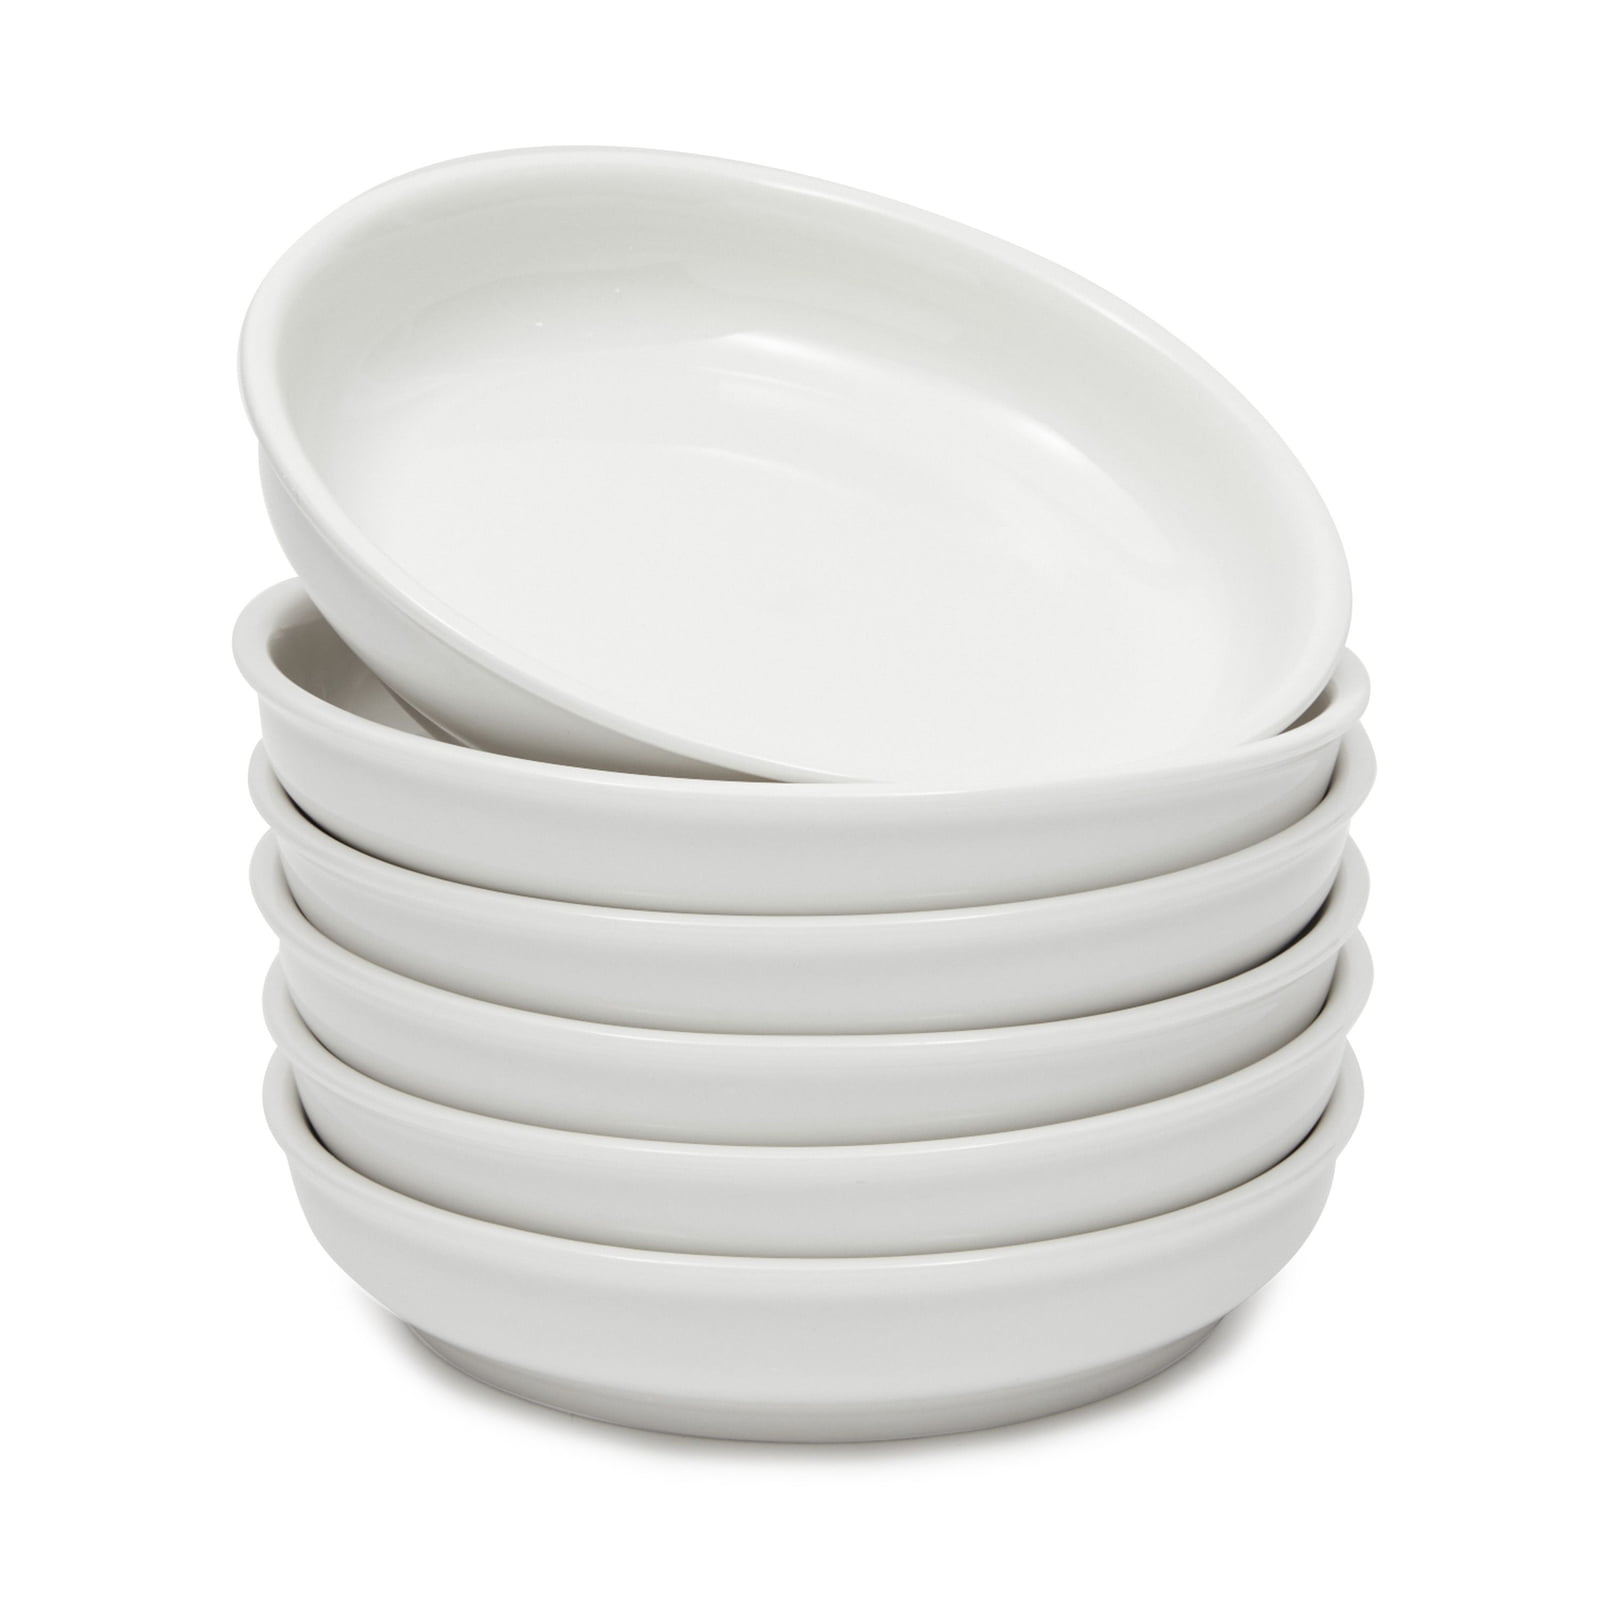 Soup Bowls 48 Ounces Large Pasta Serving Porcelain Salad Cereal White set of 4 